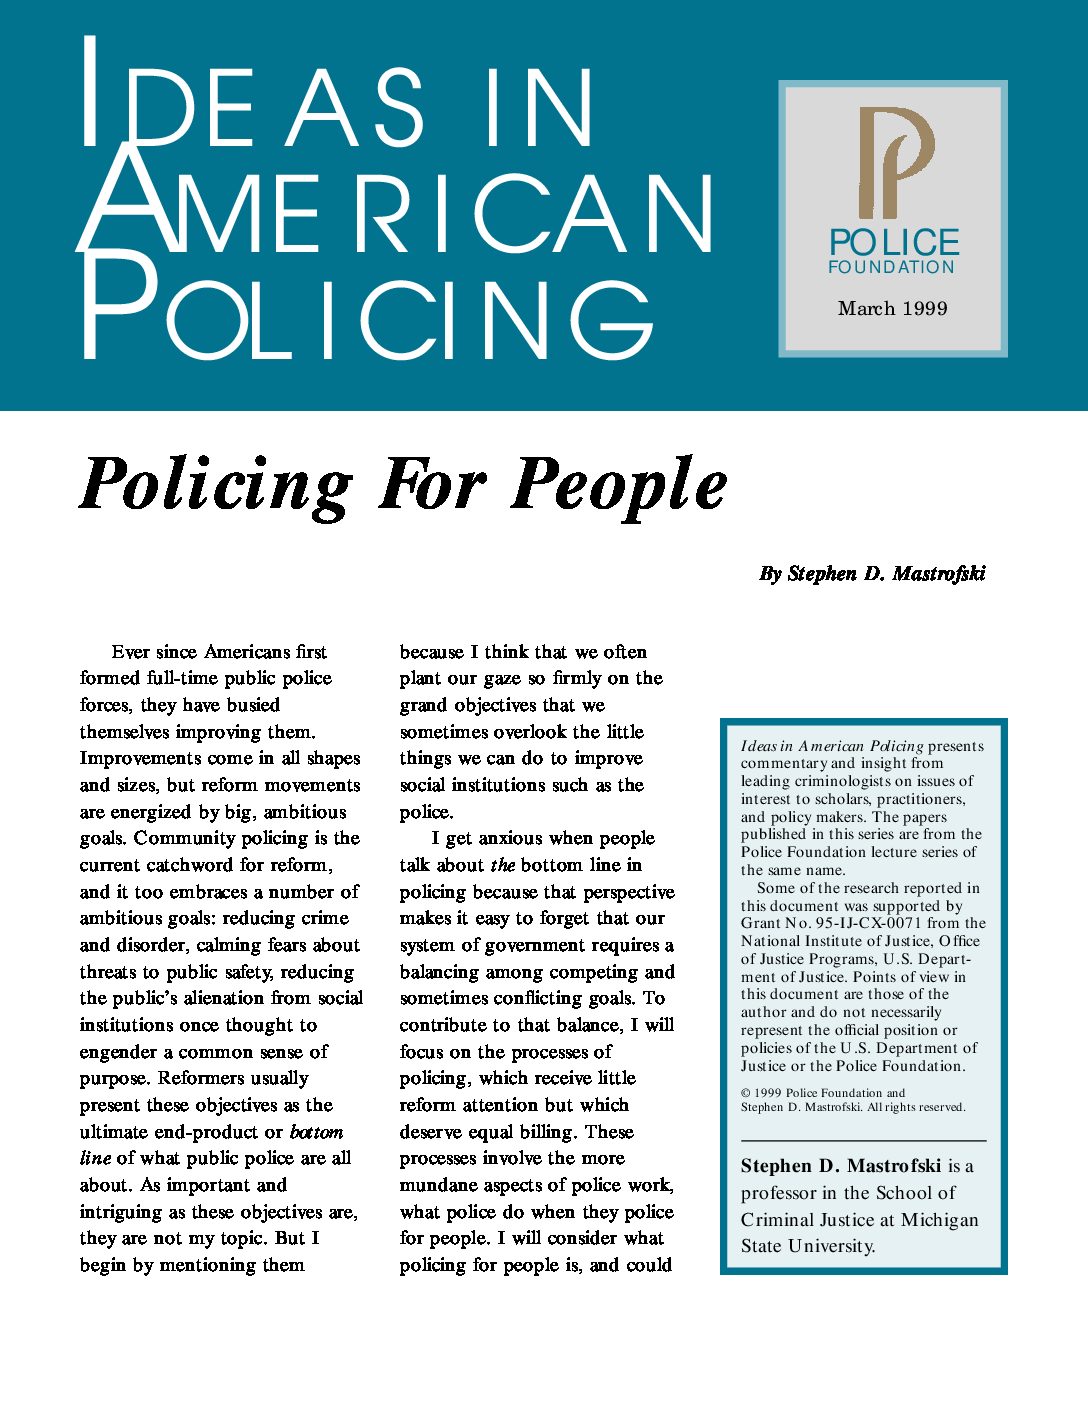 Mastrofski-1999-Policing-For-People-pdf